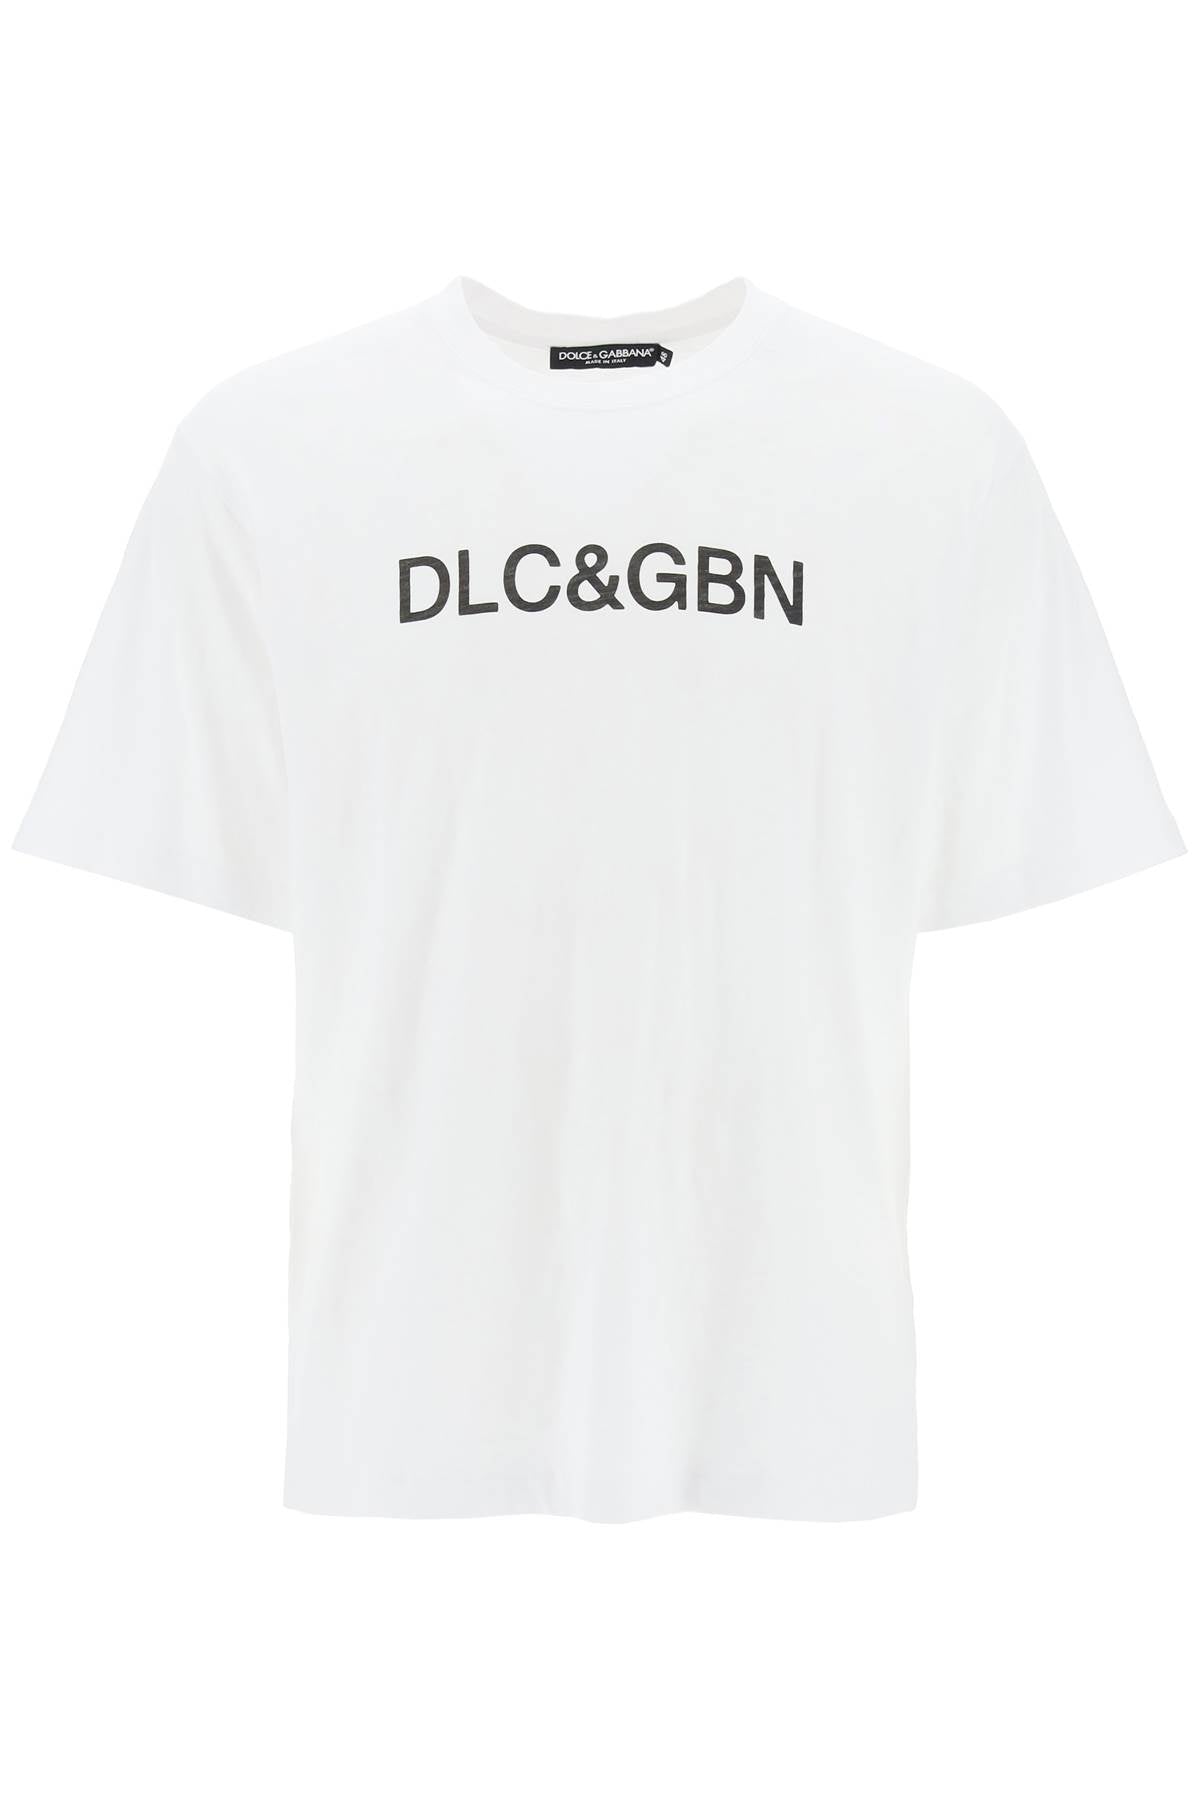 Dolce & gabbana crewneck t-shirt with logo-0